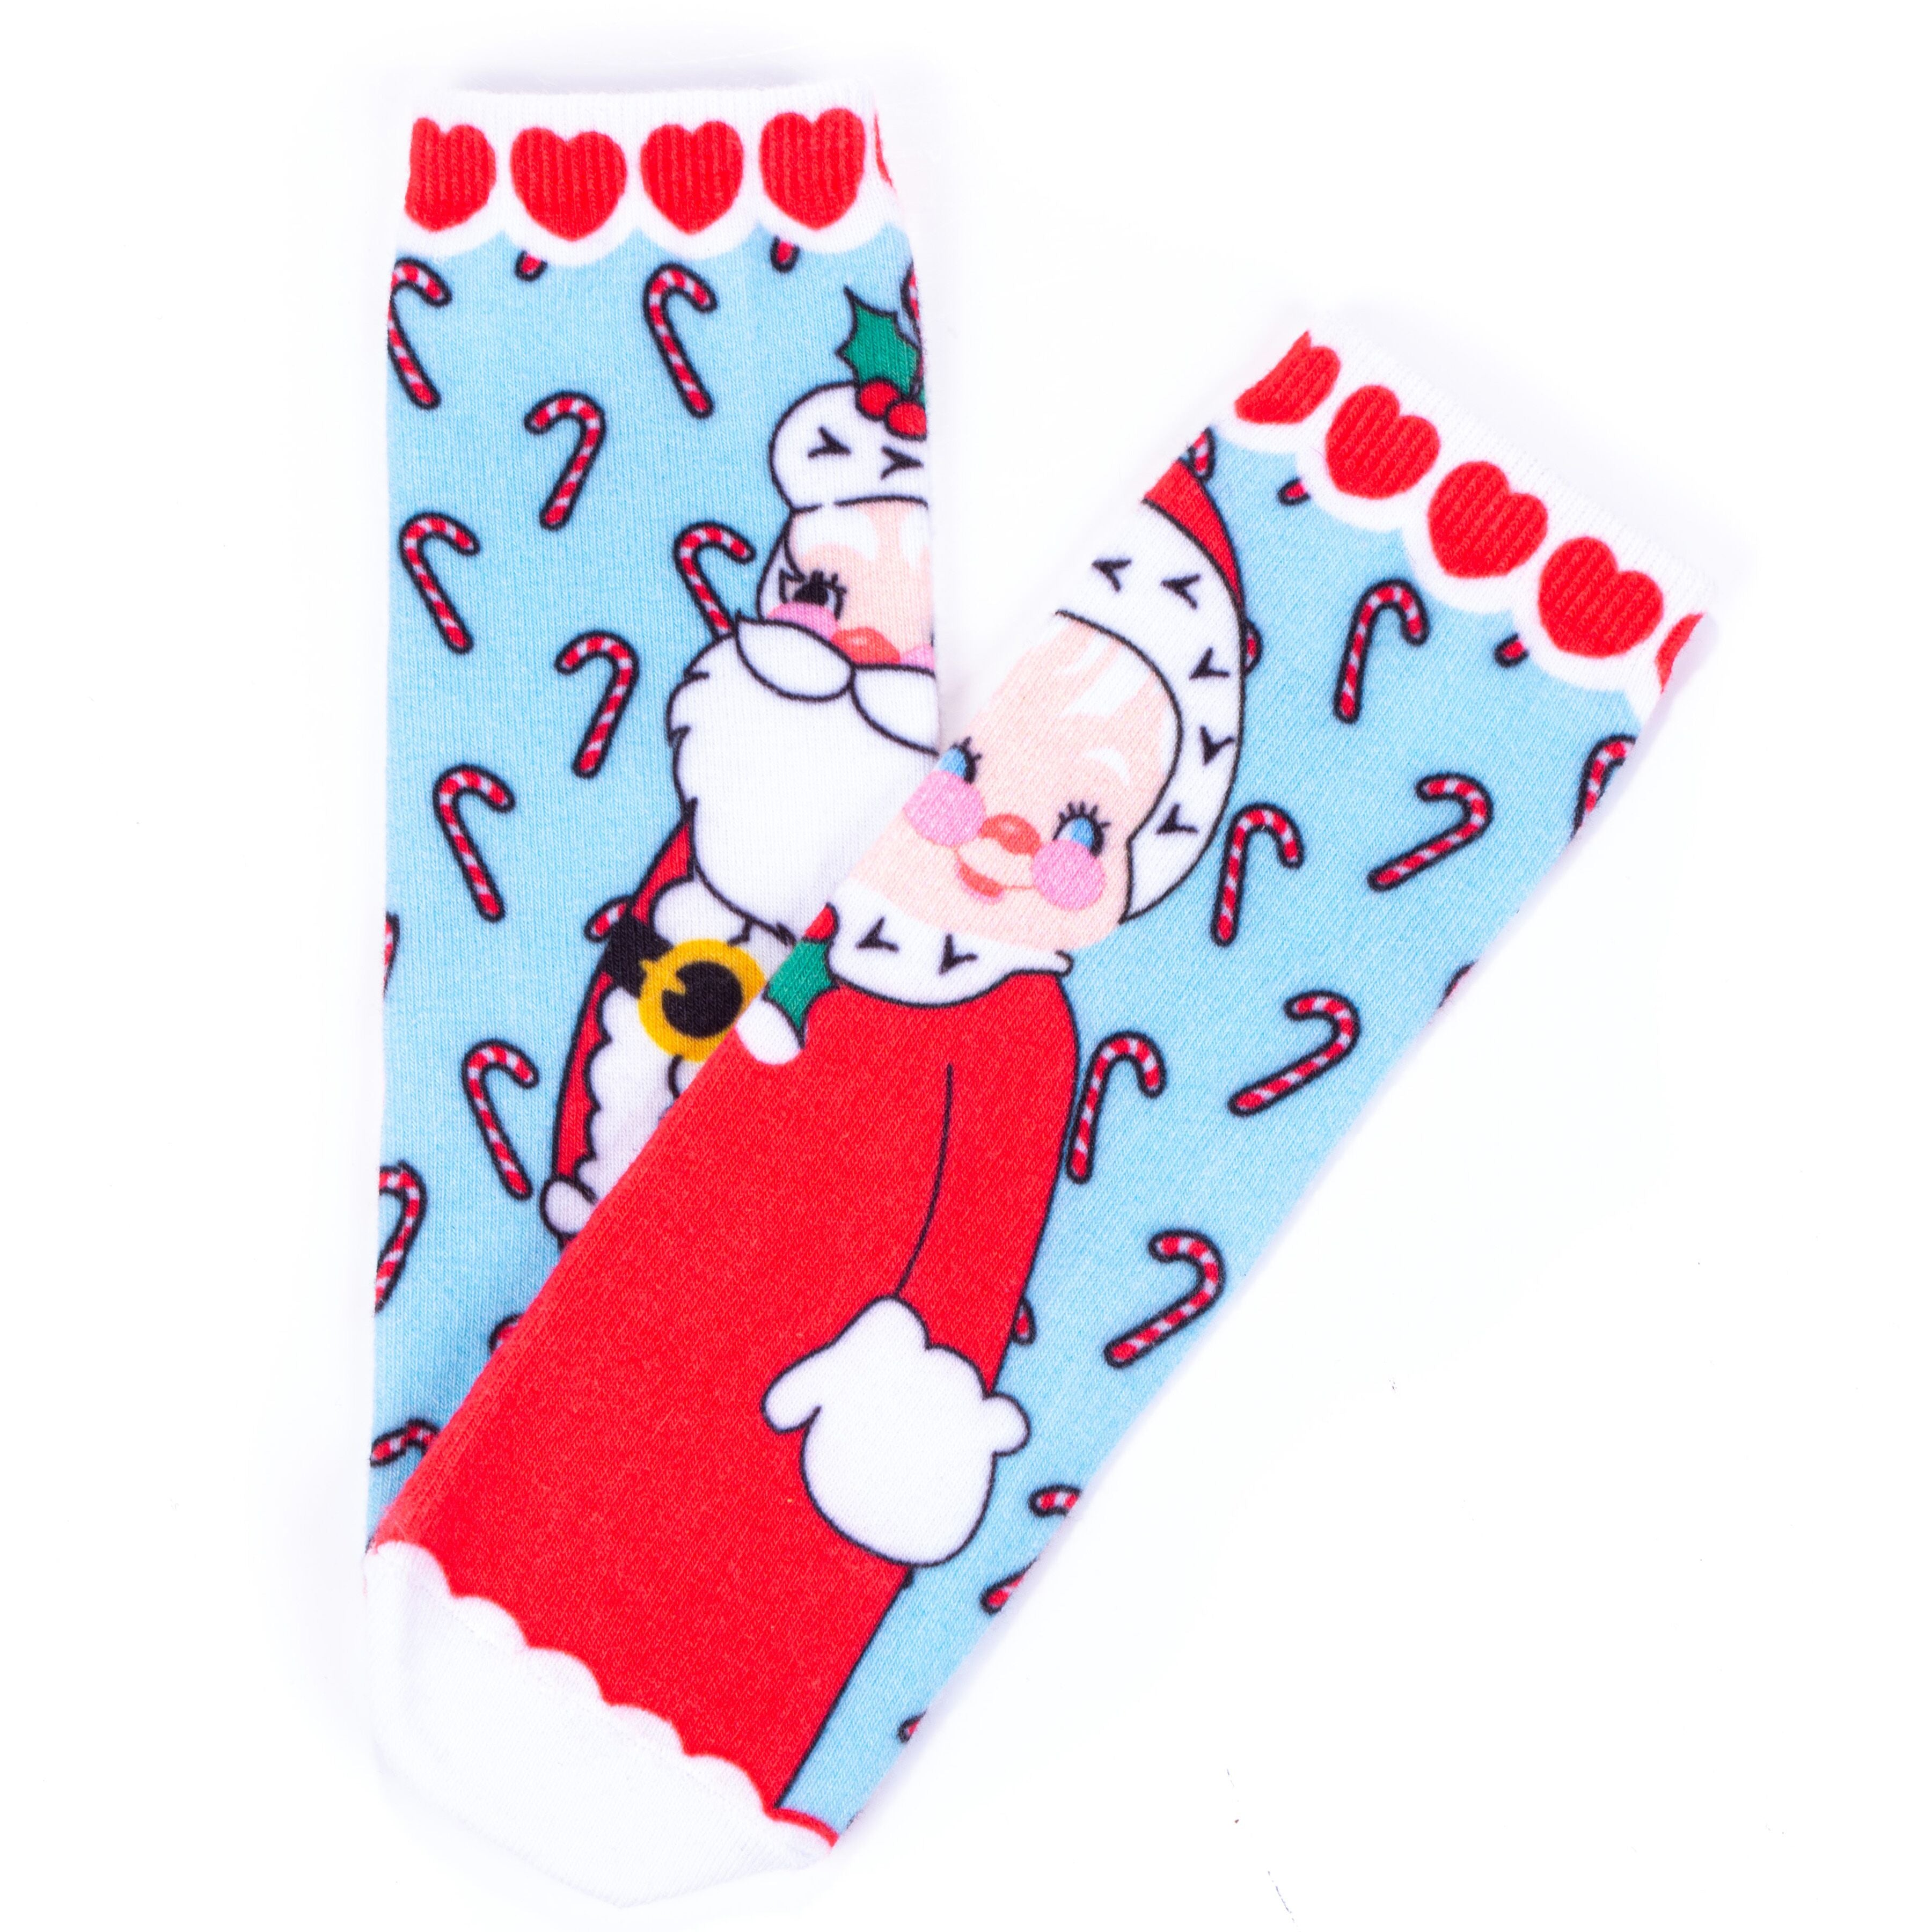 IRREGULAR CHOICE Mr And Mrs Kringle Christmas Socks